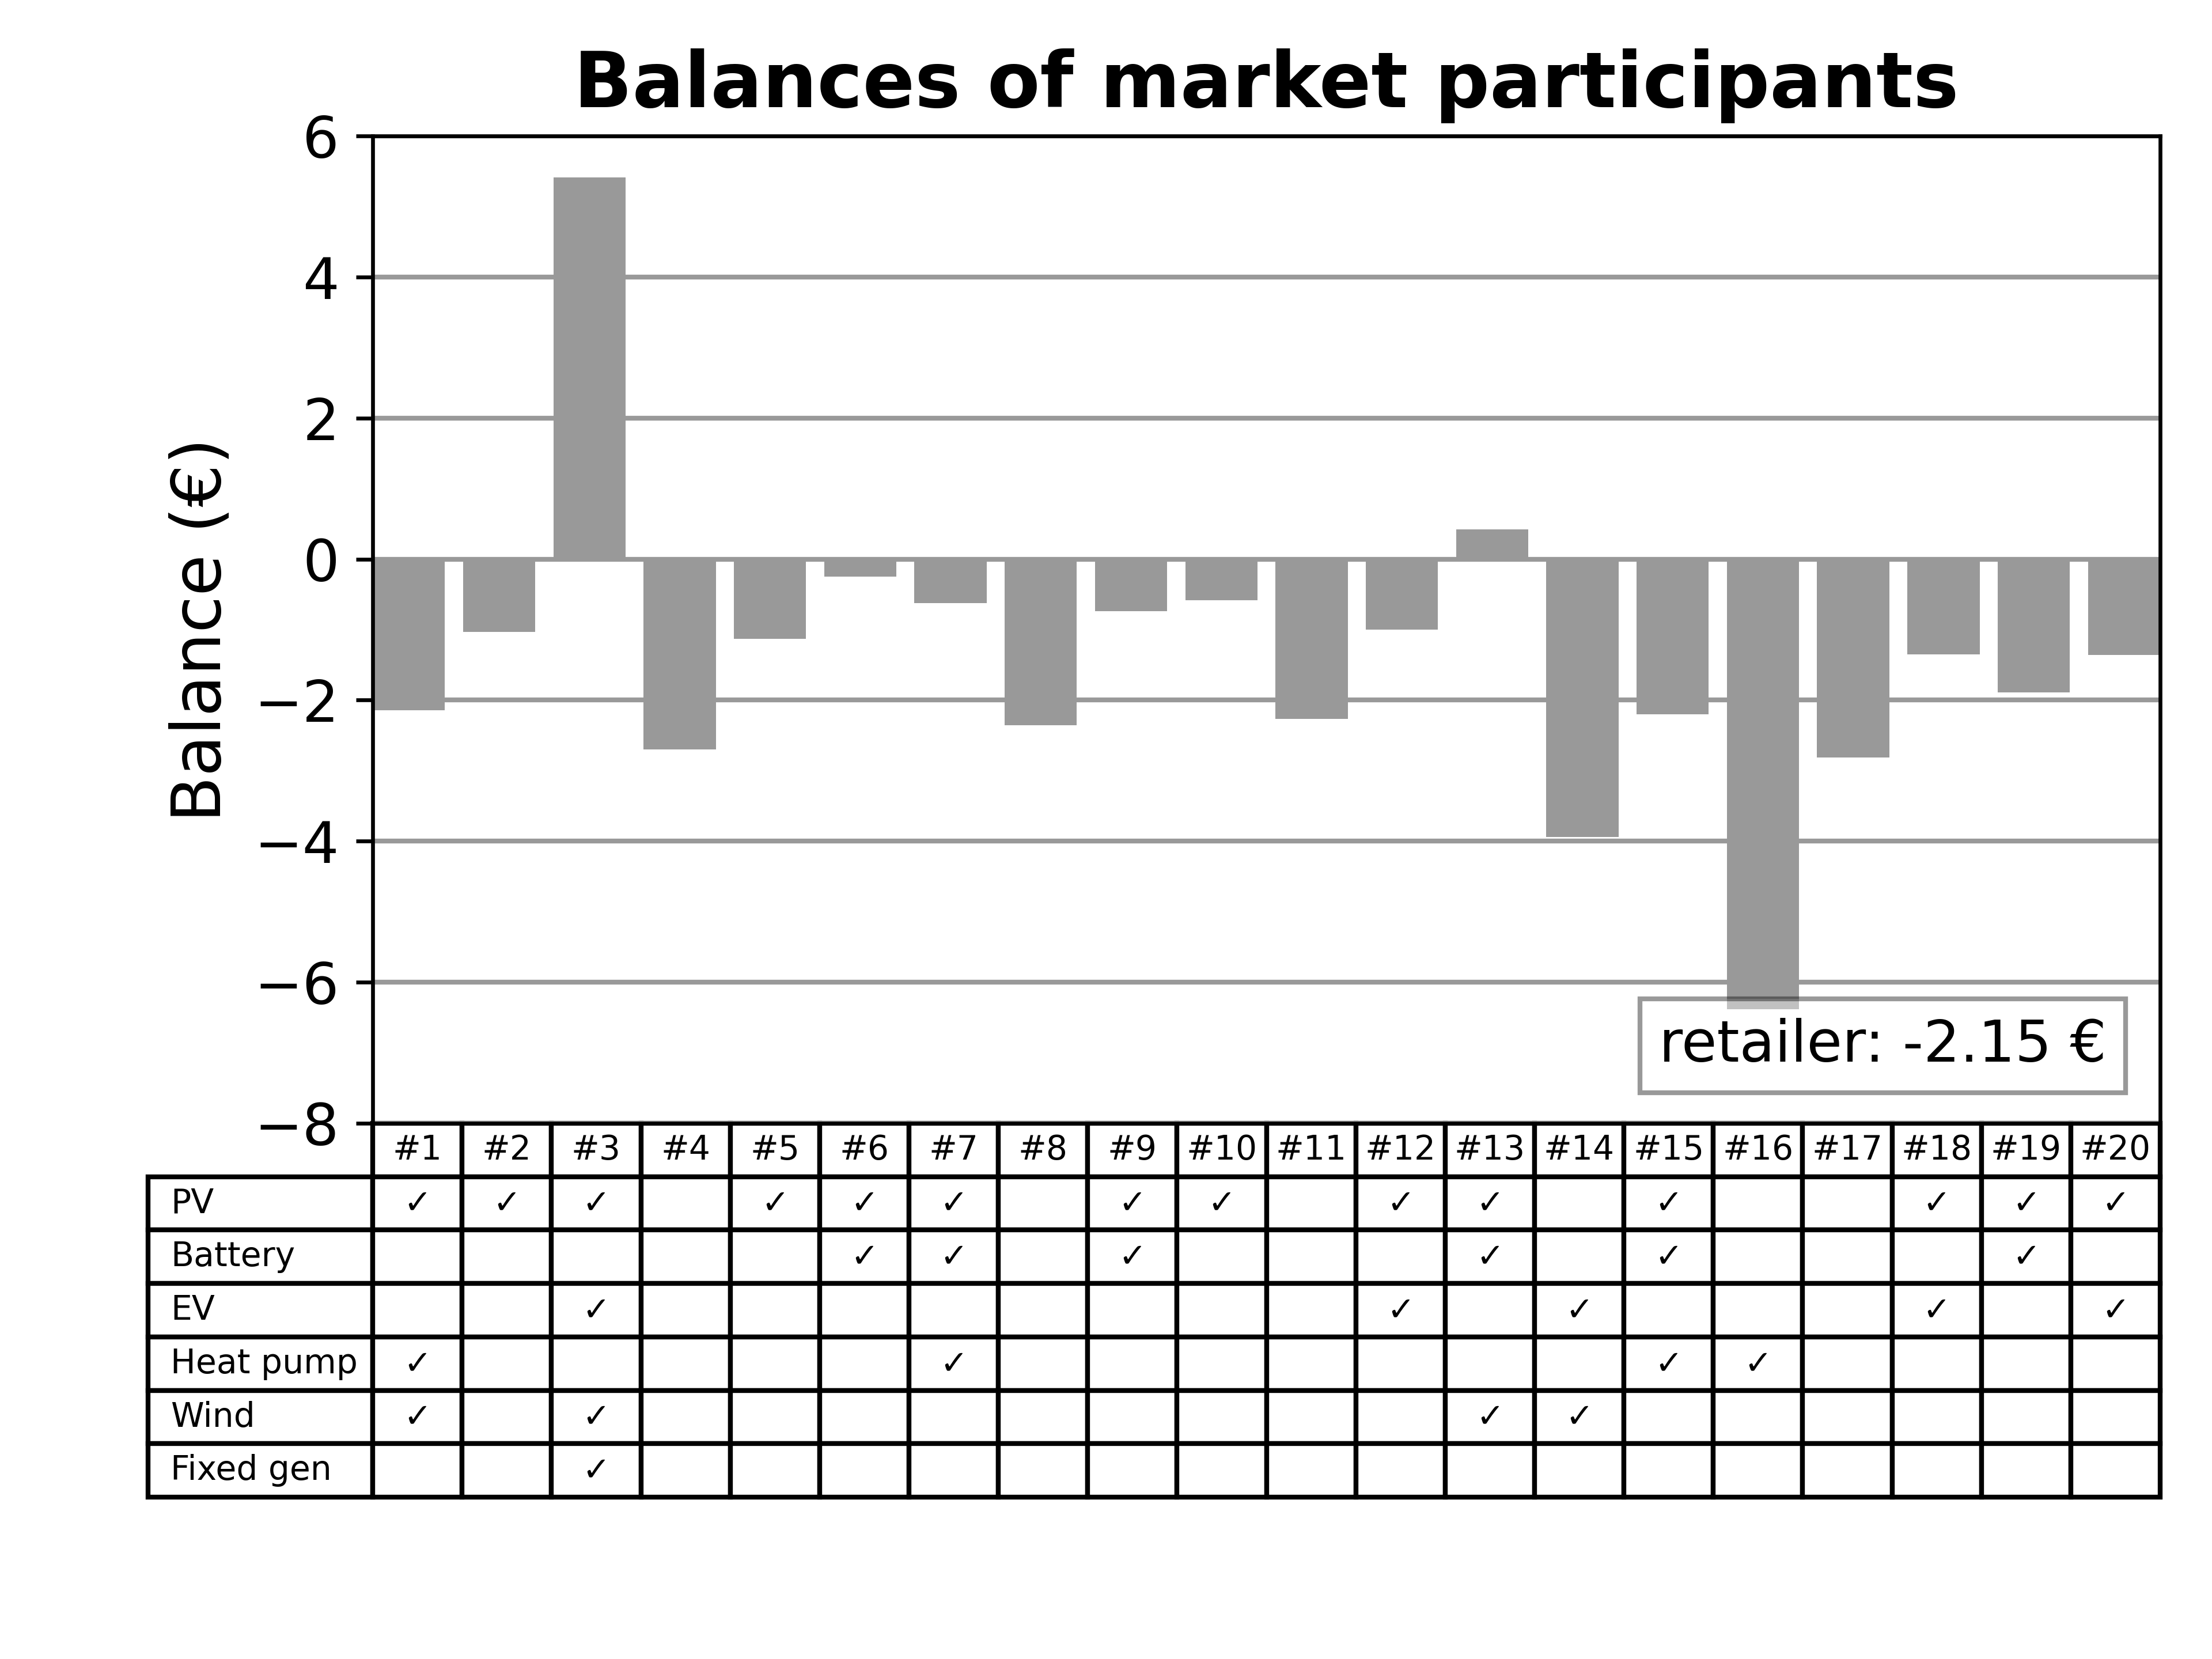 Market balance of all participants